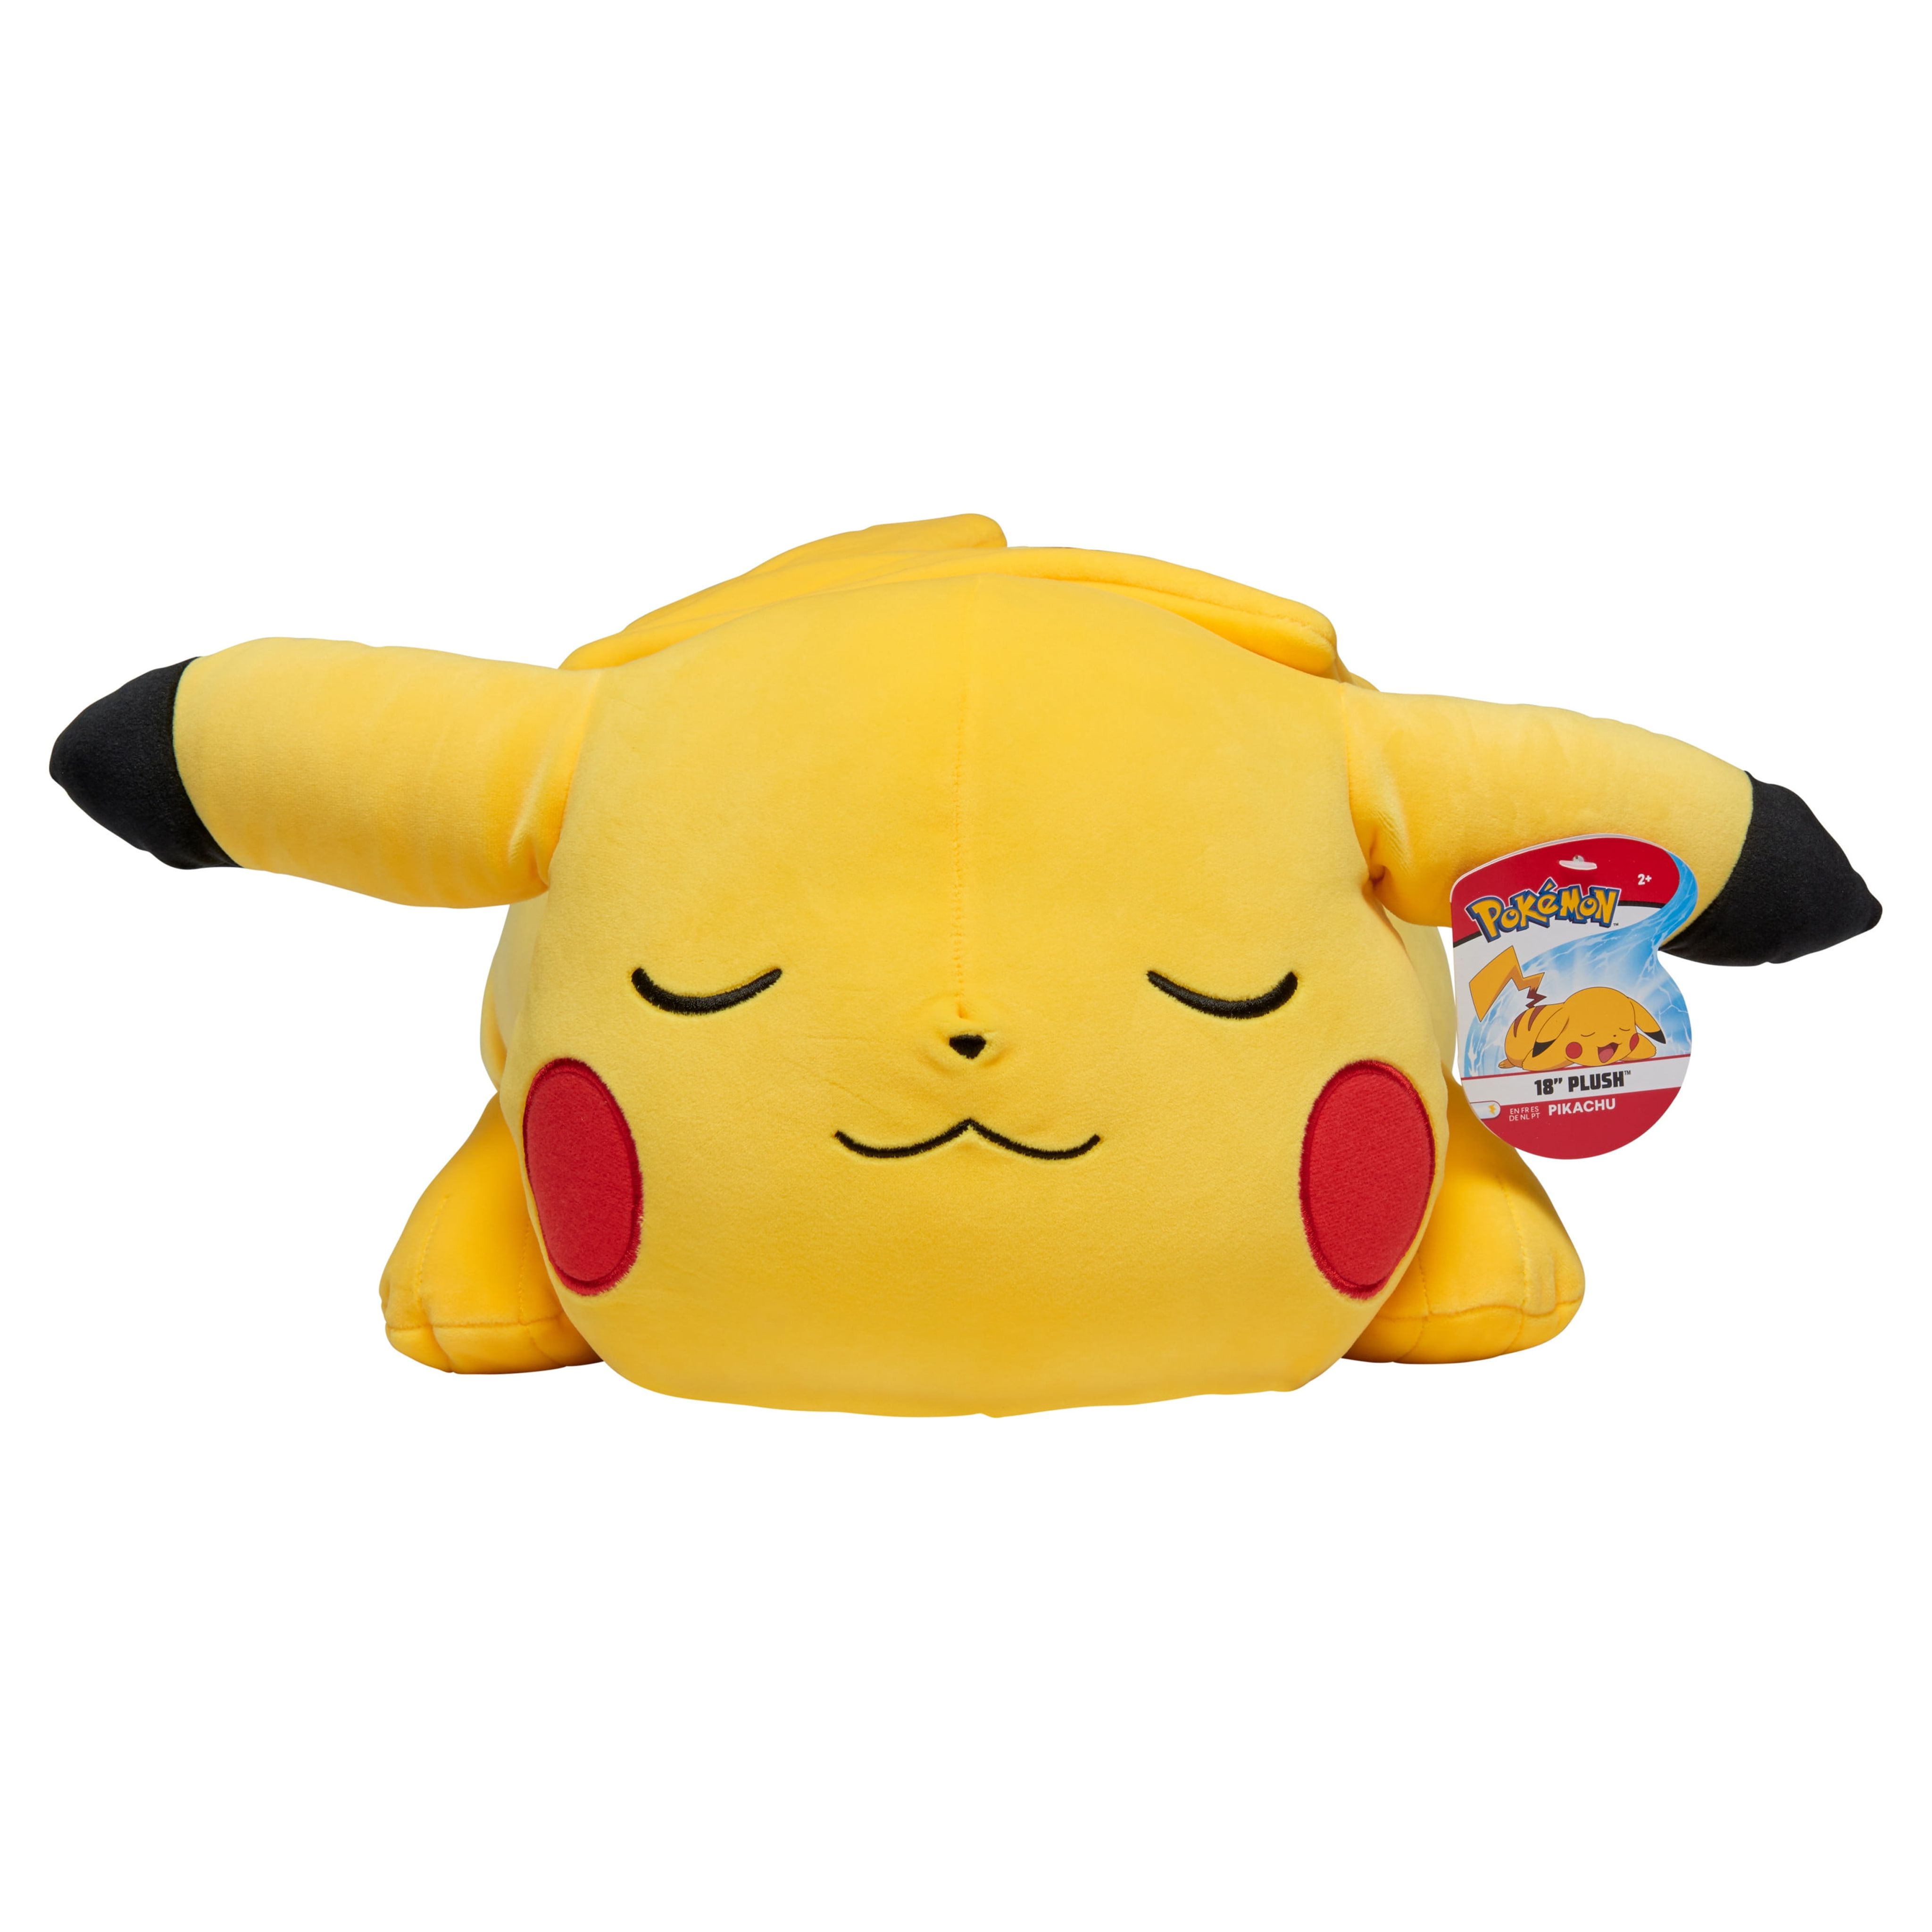 Pokemon 18" Sleeping Pikachu Premium Plush - image 1 of 4